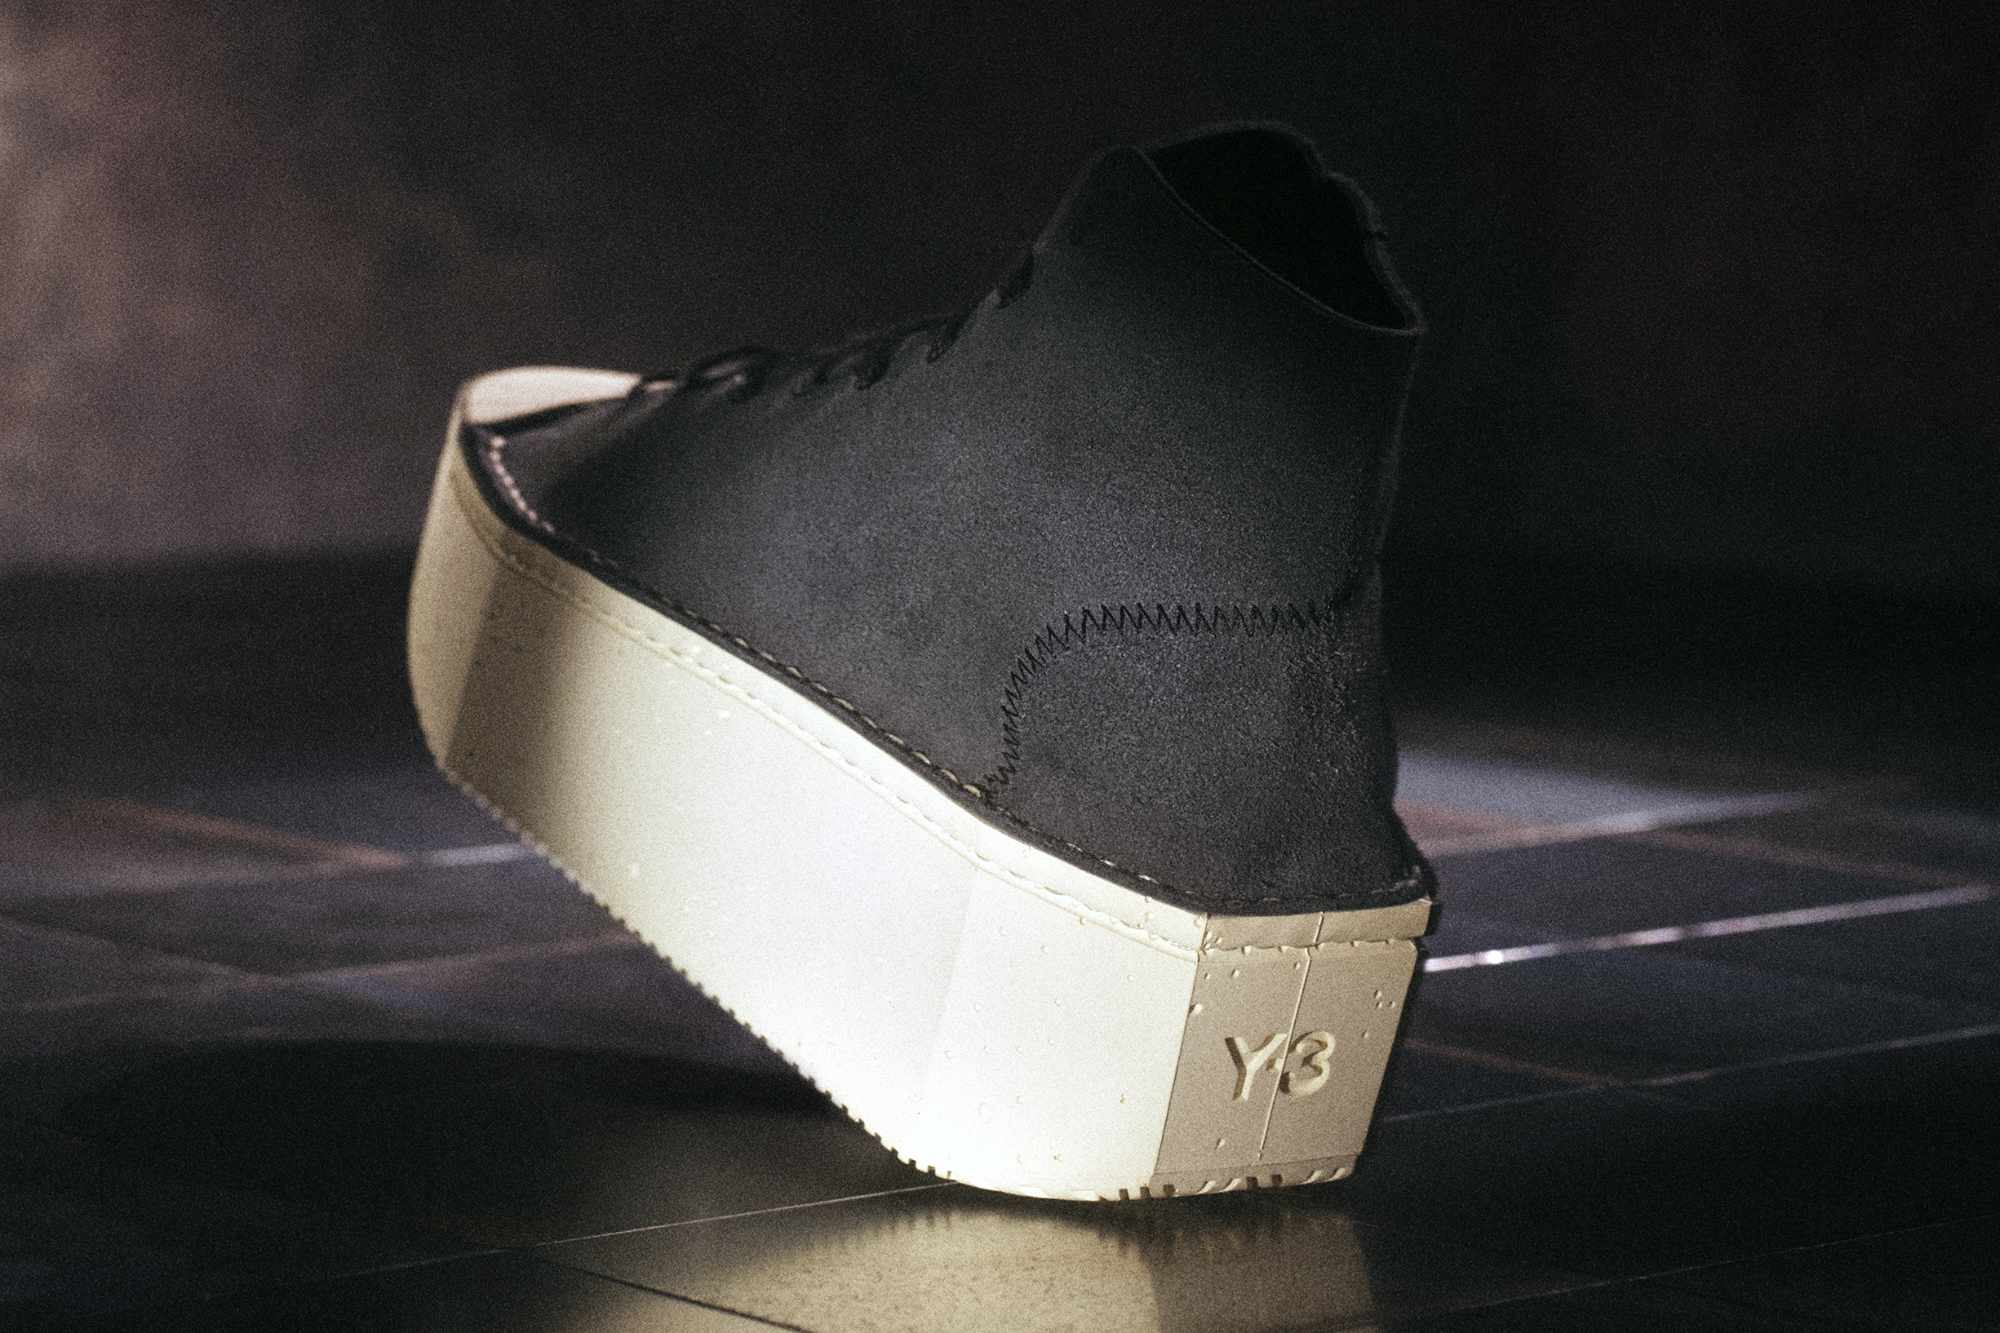 Adidas NMD x Louis Vuitton x Supreme Custom Sneakers (SALE)